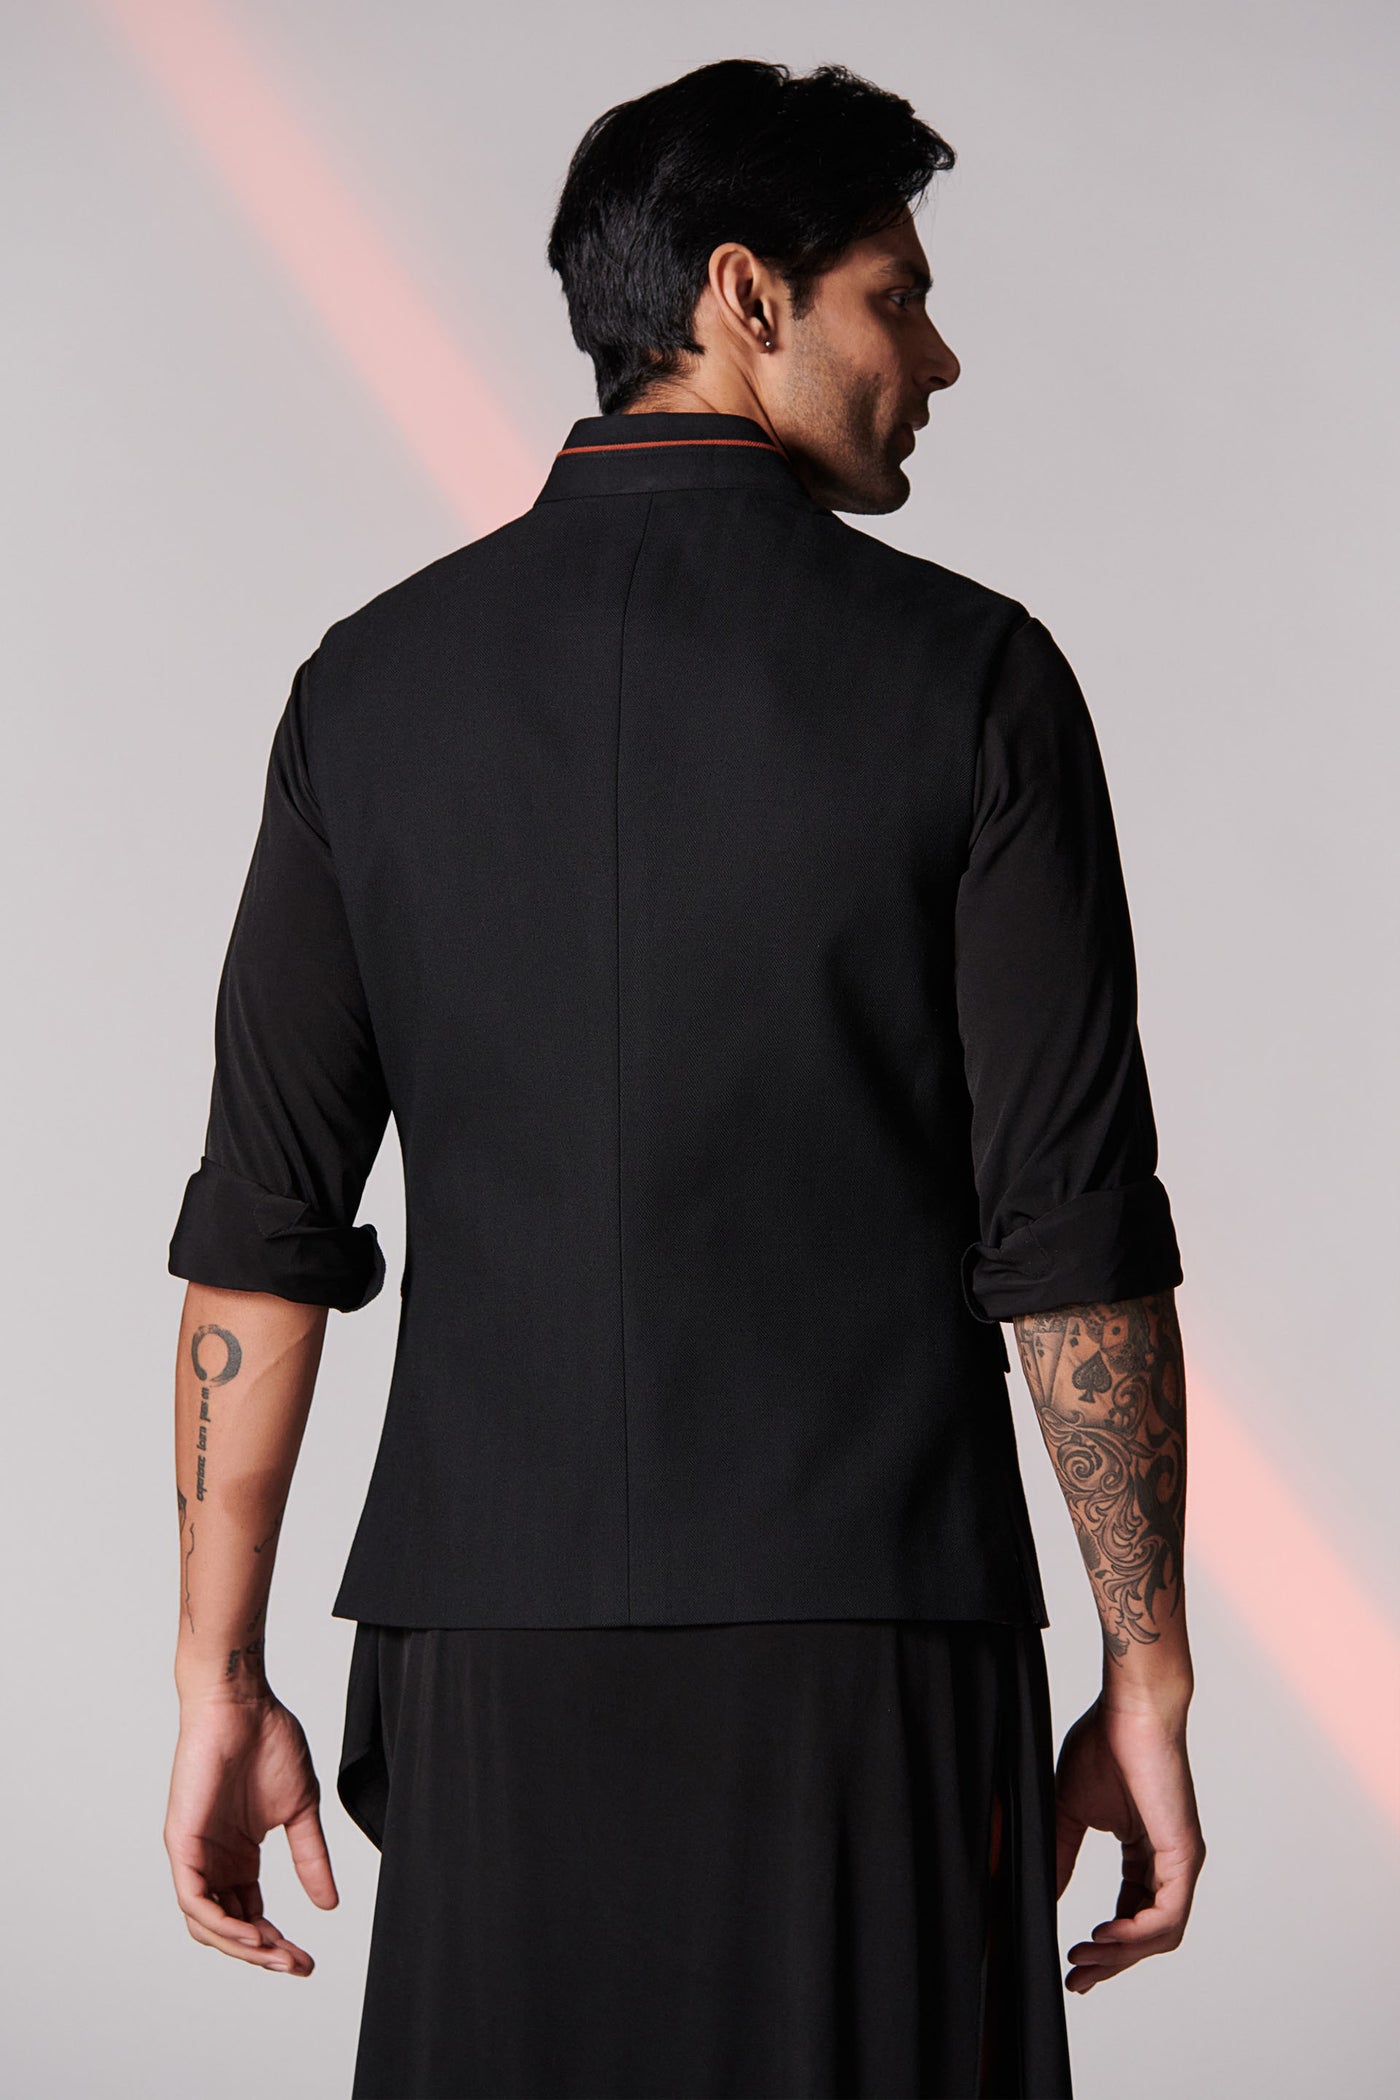 Shantanu & Nikhil Classic Black Waistcoat with Colour Block Details indian menswear designer fashion online shopping melange singapore